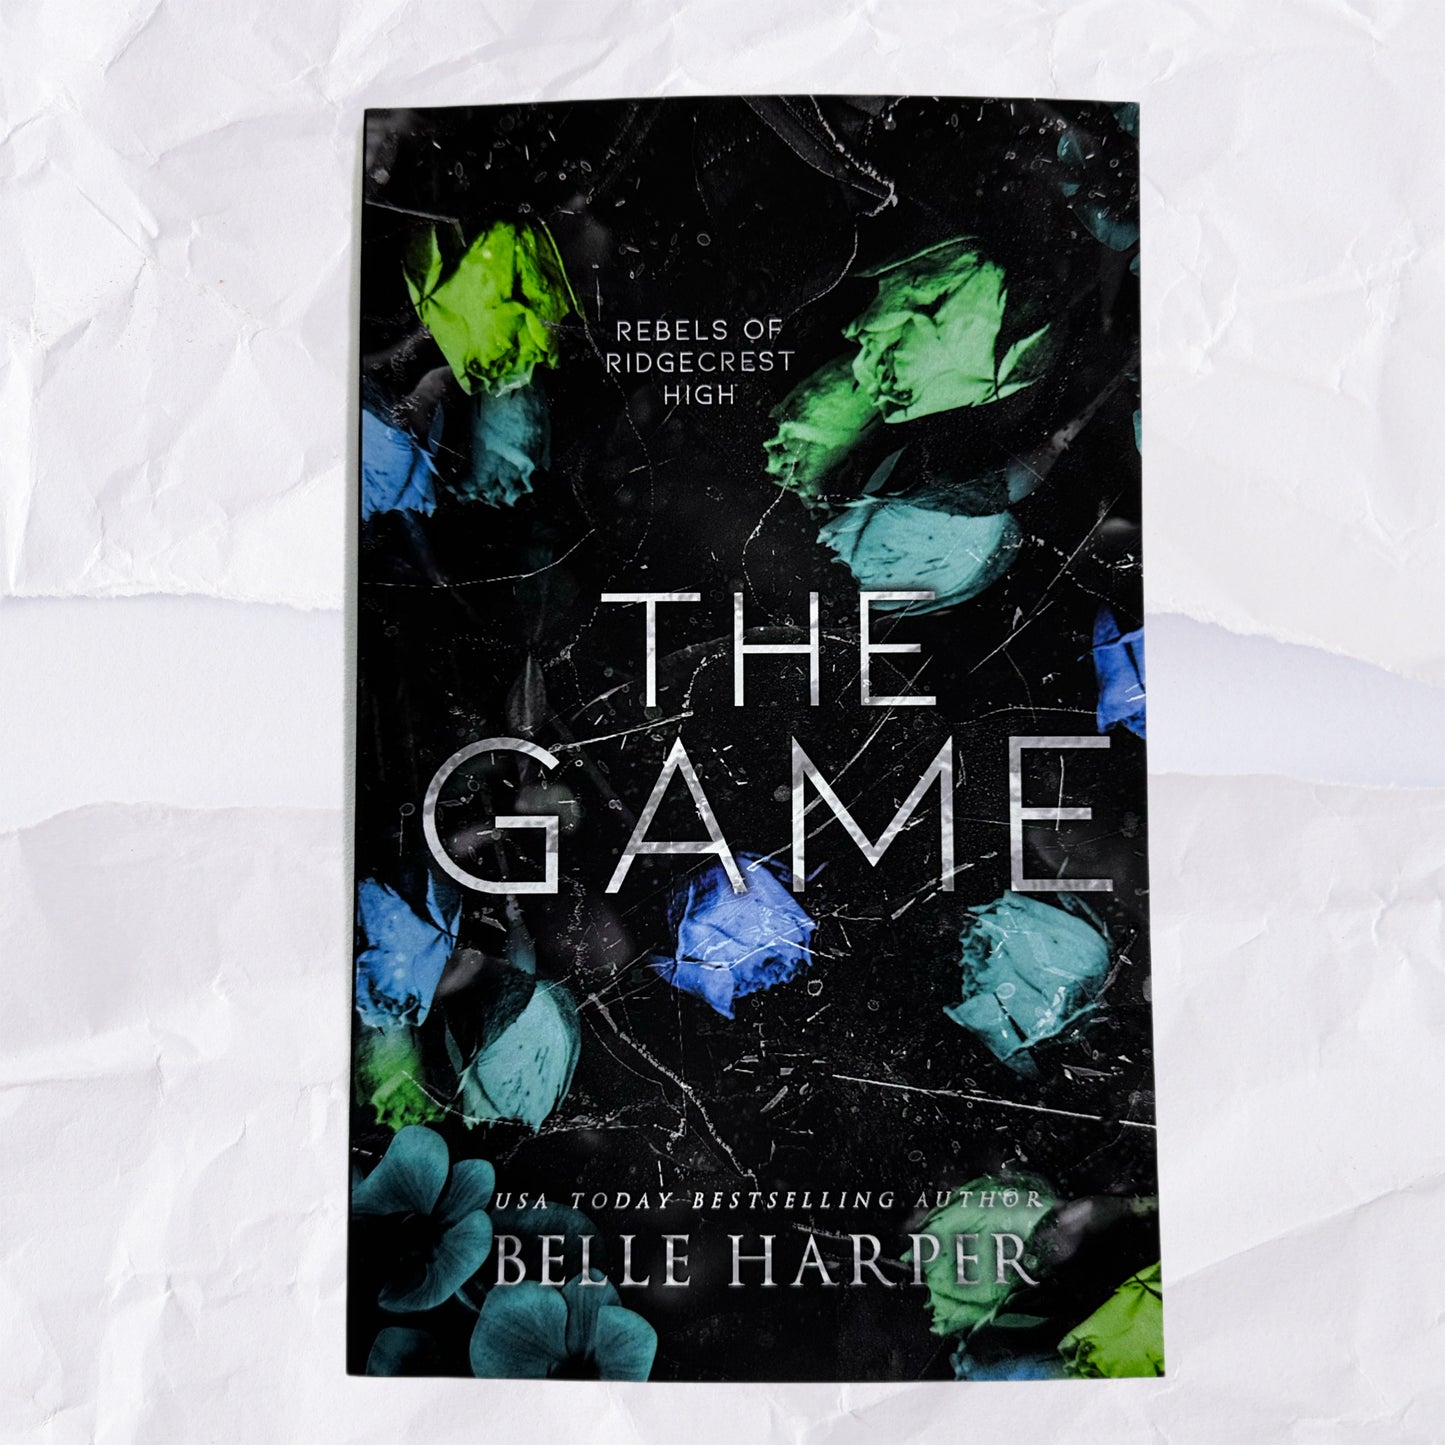 The Game (Rebels of Ridgecrest High #3) by Belle Harper - Original Cover